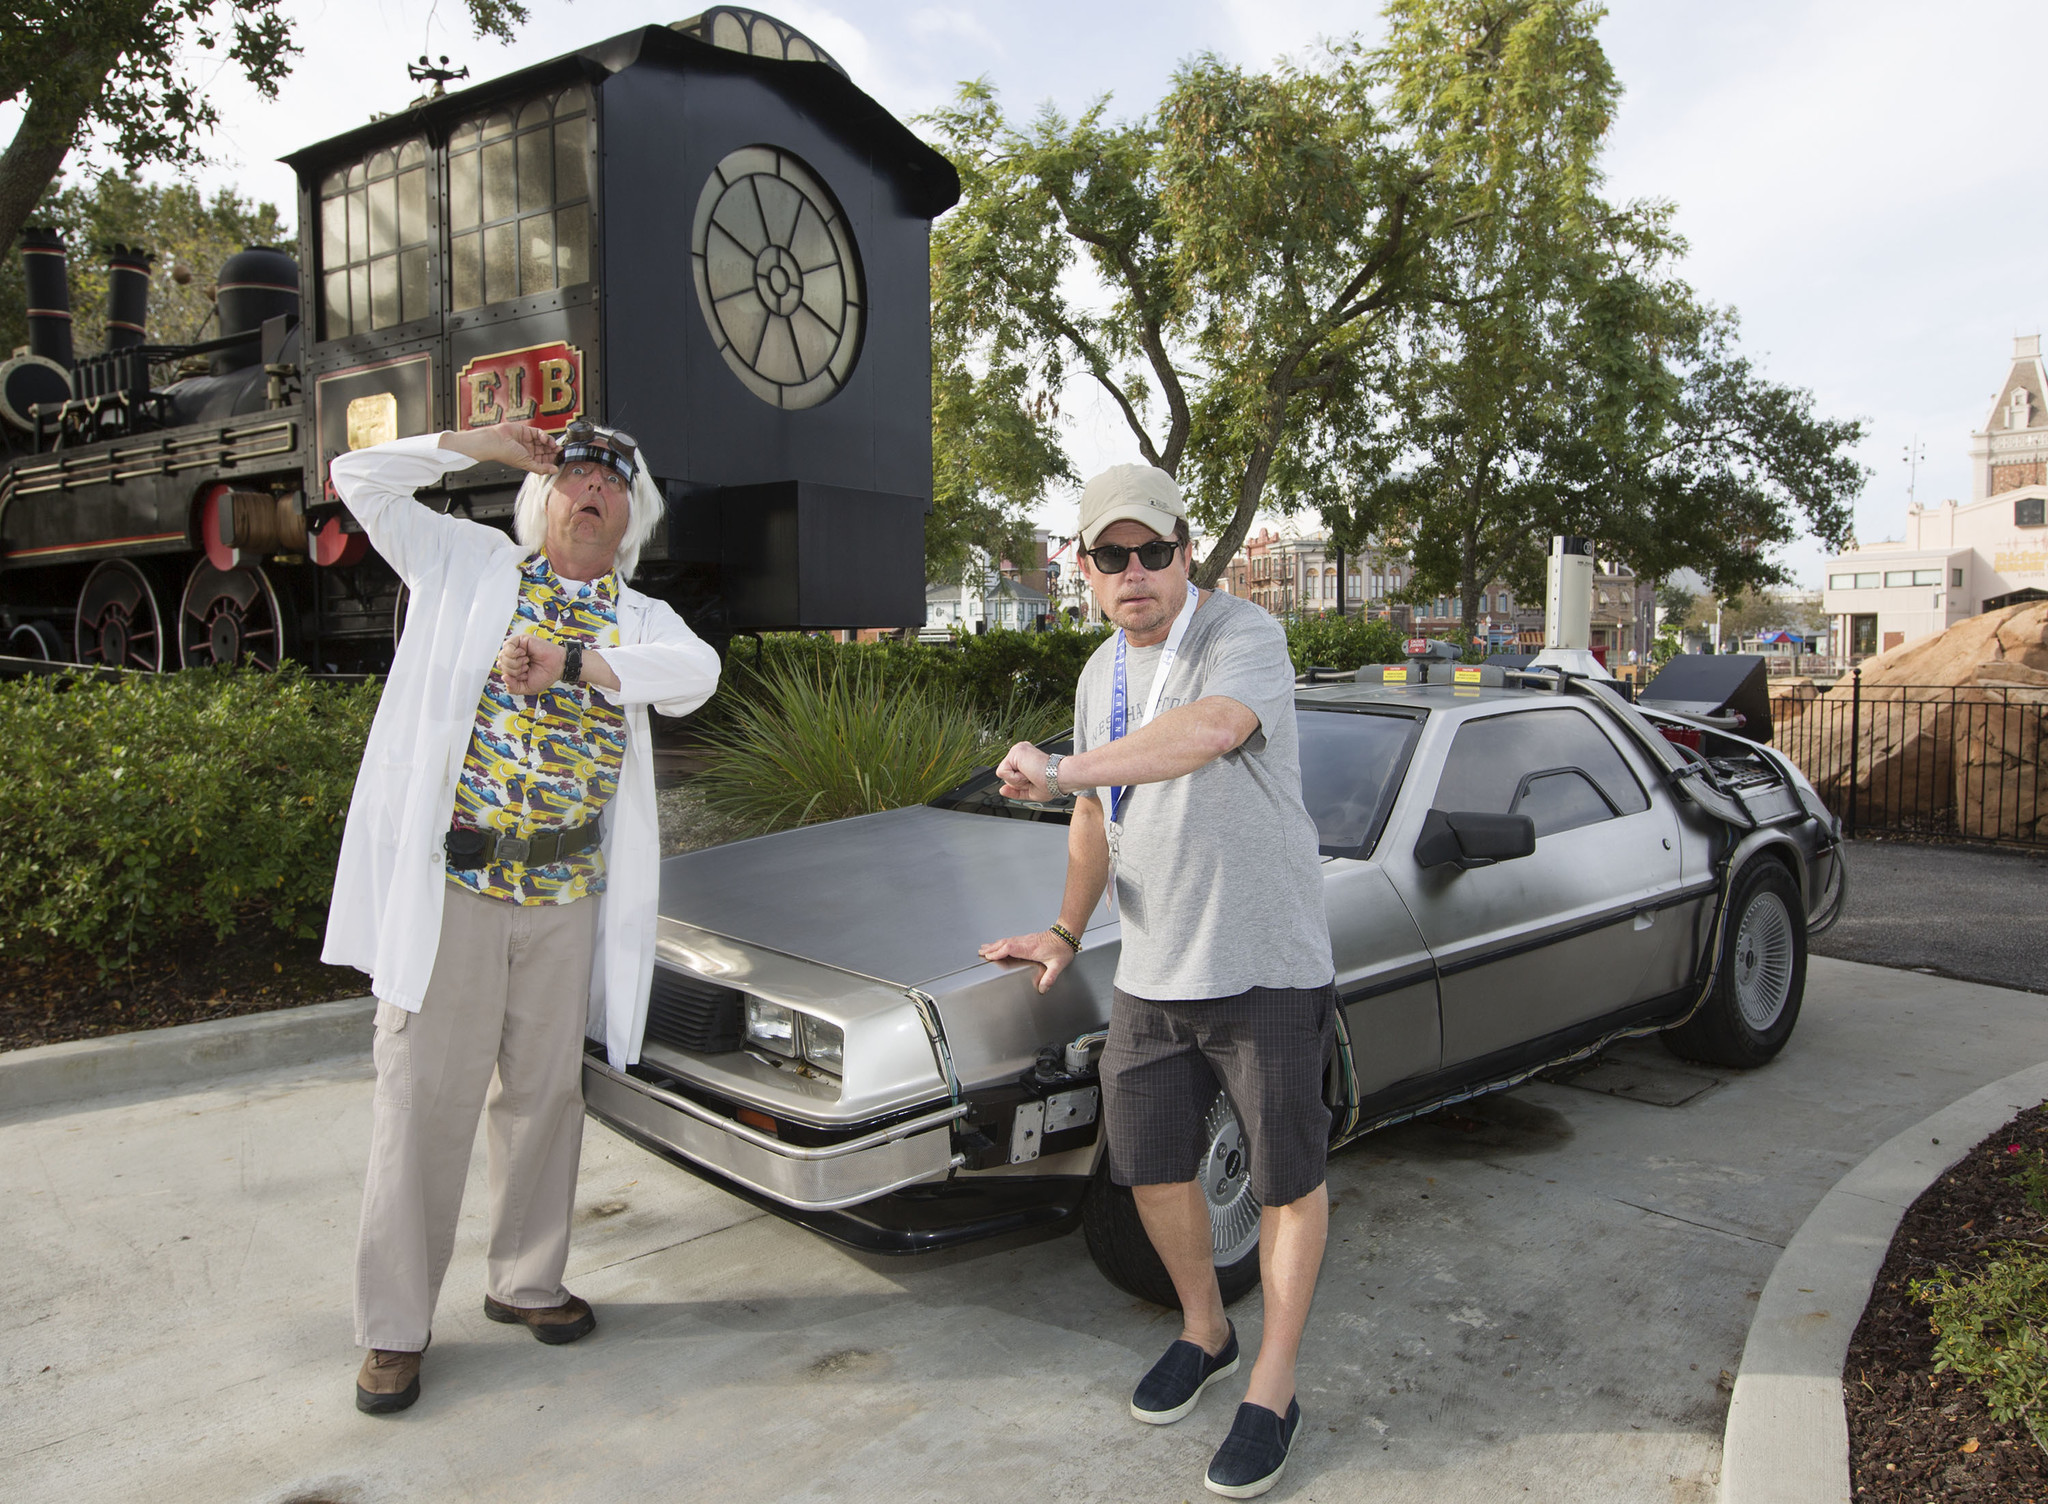 Picture it: Michael J. Fox at Universal Studios - Orlando Sentinel